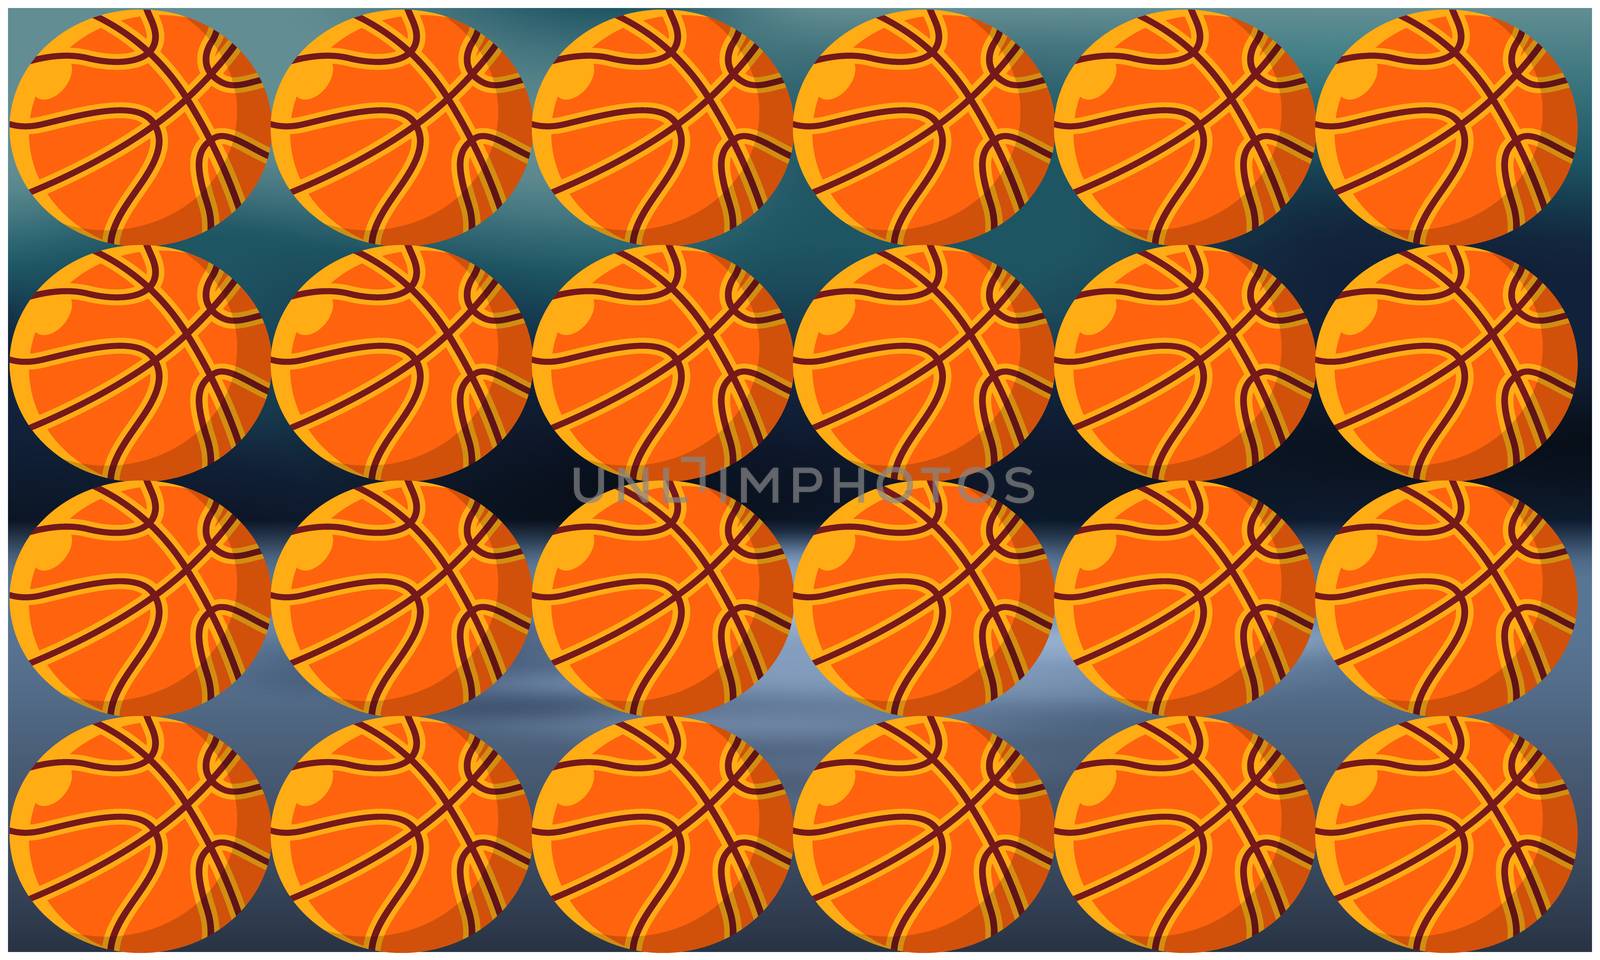 digital textile design of basket balls on abstract background